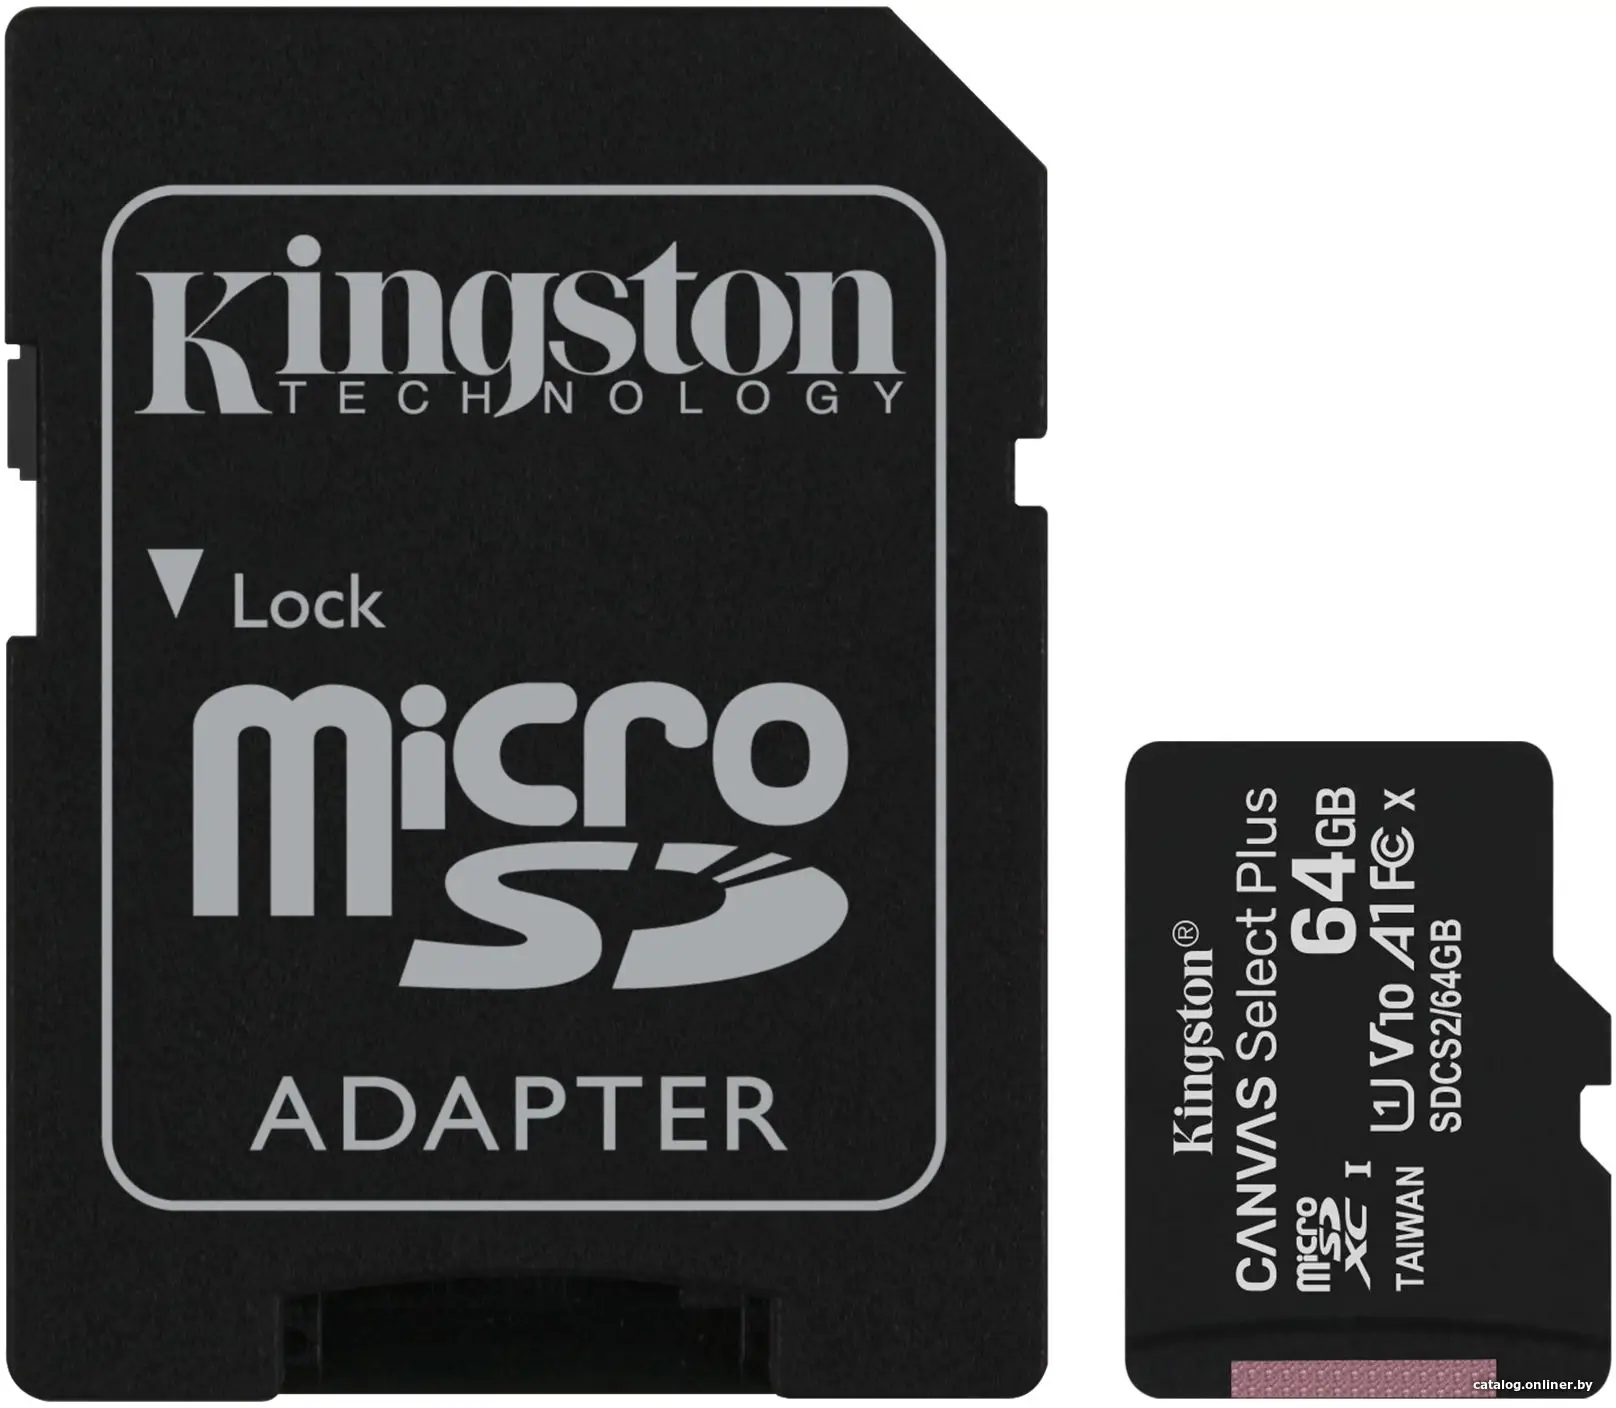 Купить Kingston 64GB micSDXC Canvas Select Plus 100R A1 C10 Card + ADP, EAN: 740617298697, цена, опт и розница